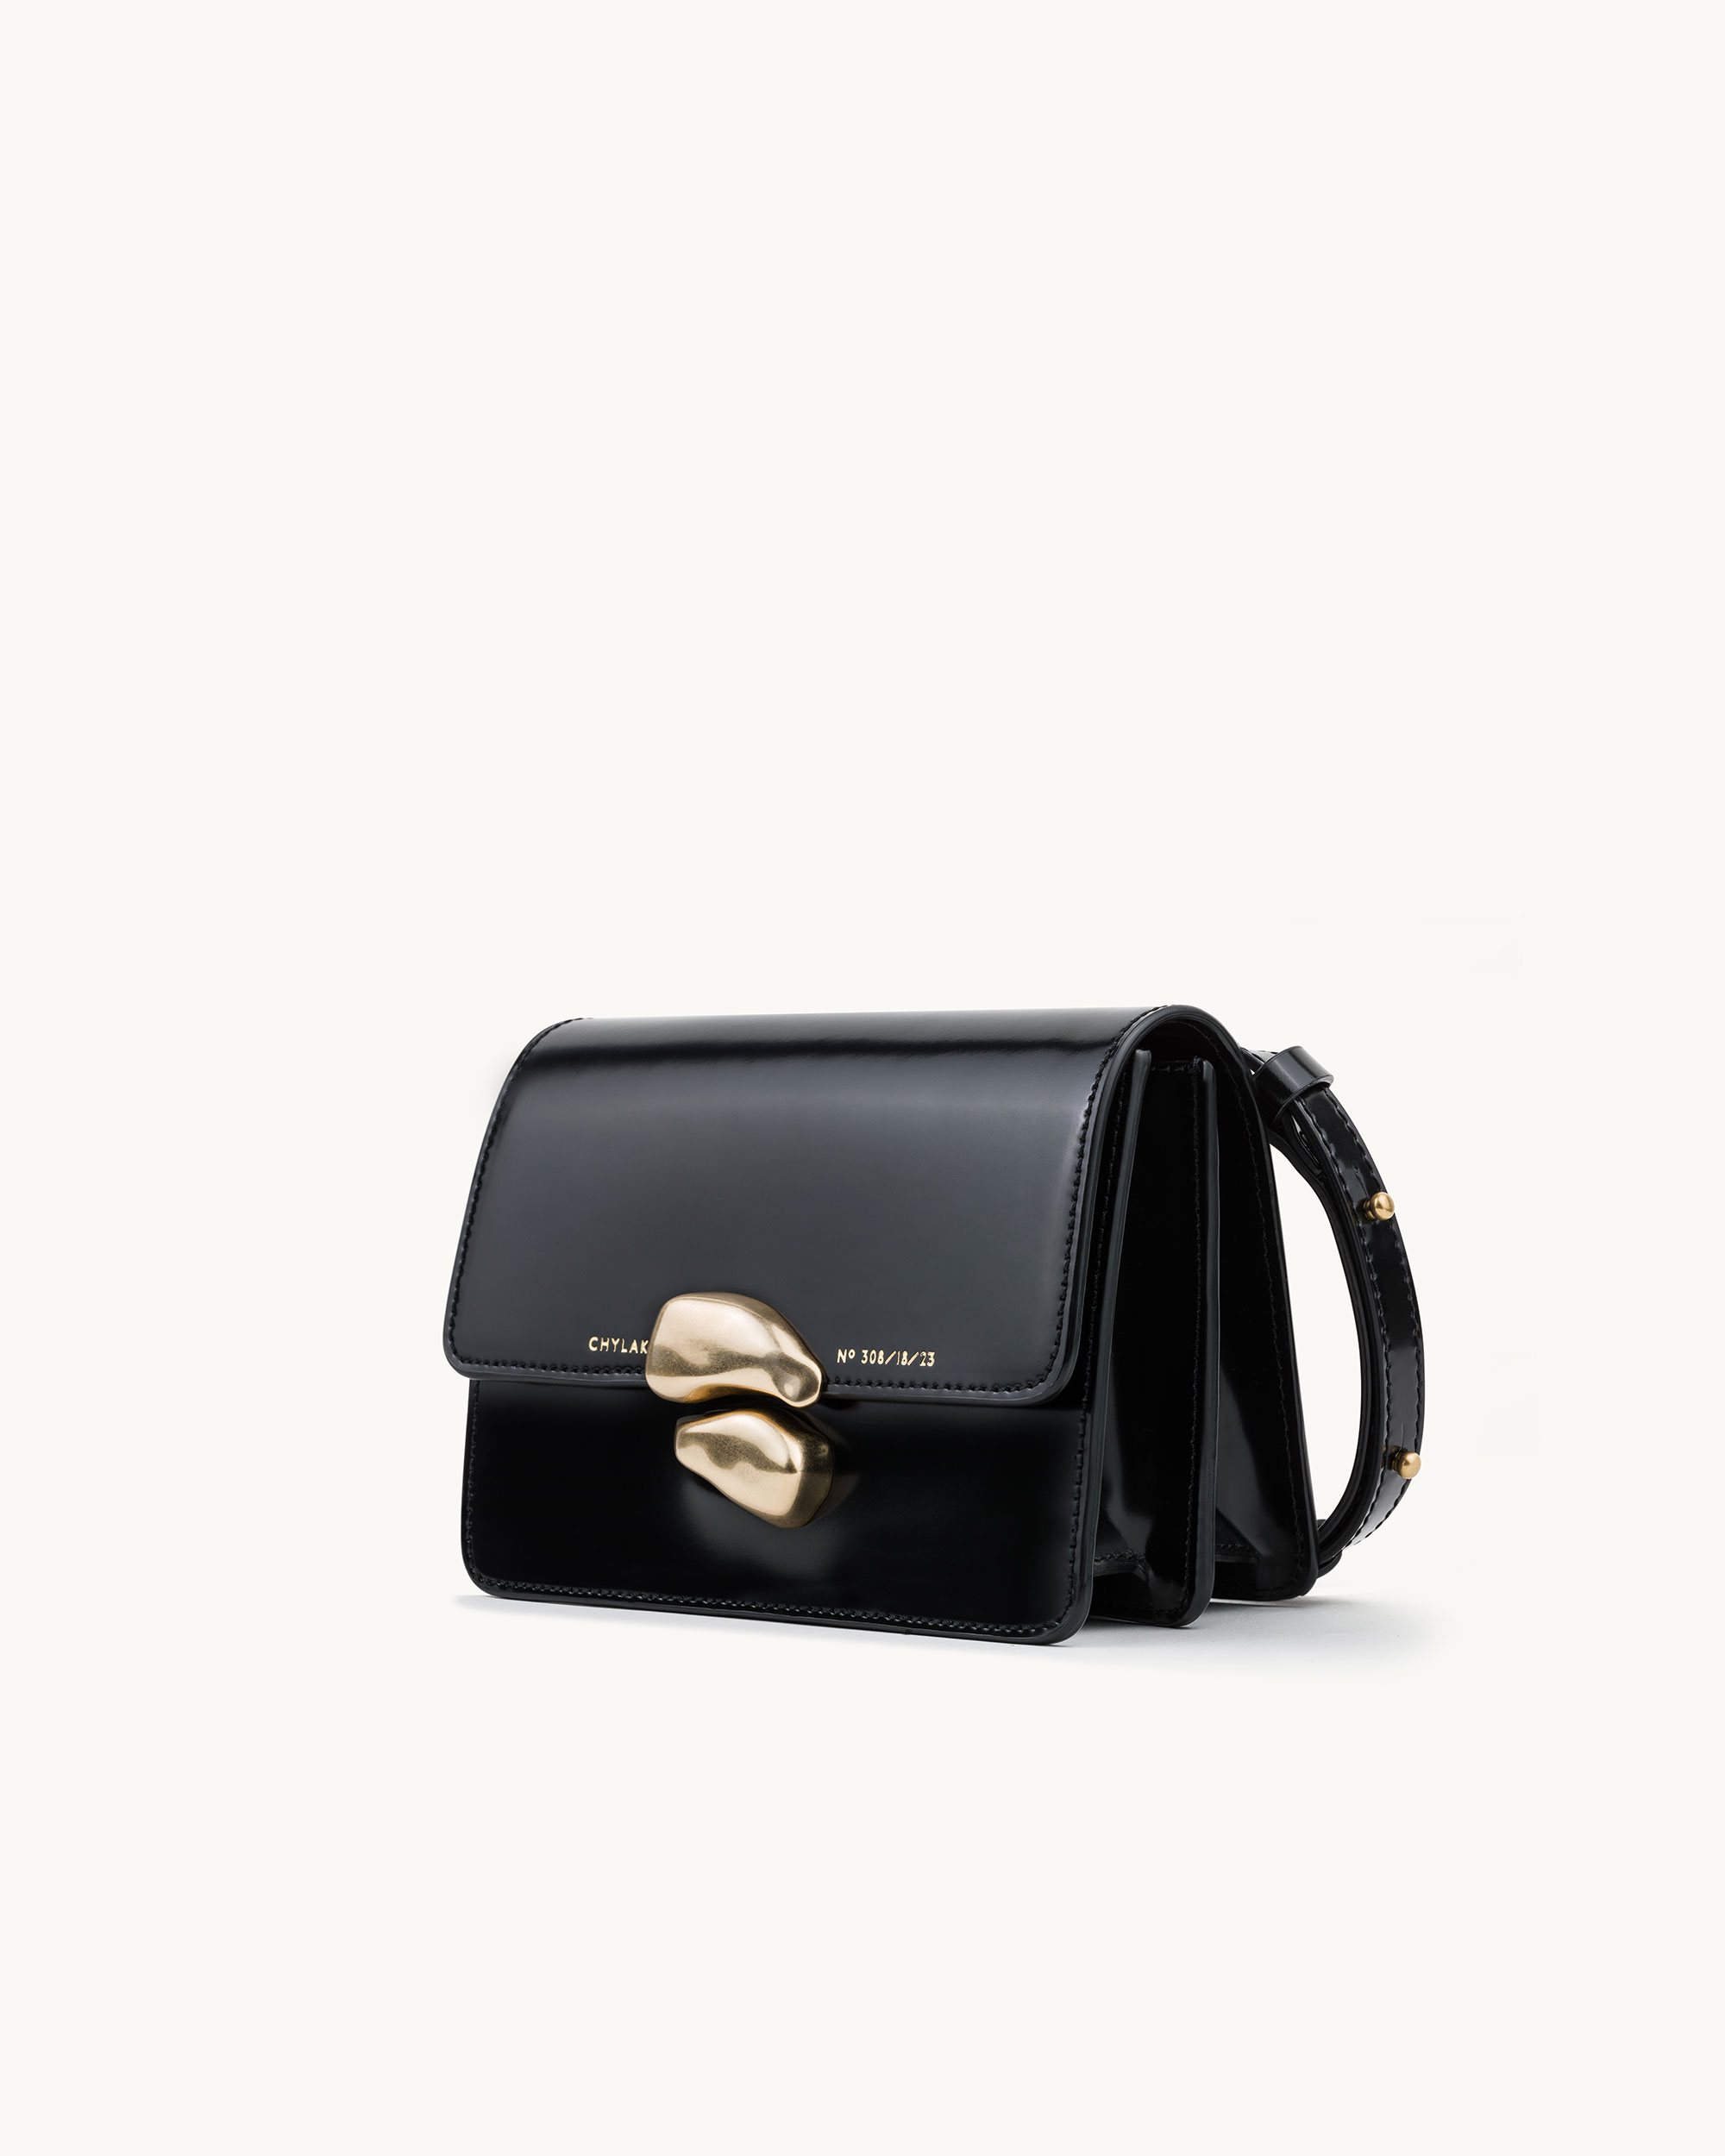 Mini Belt Bag with Sculptural Seal “glossy black” - Chylak